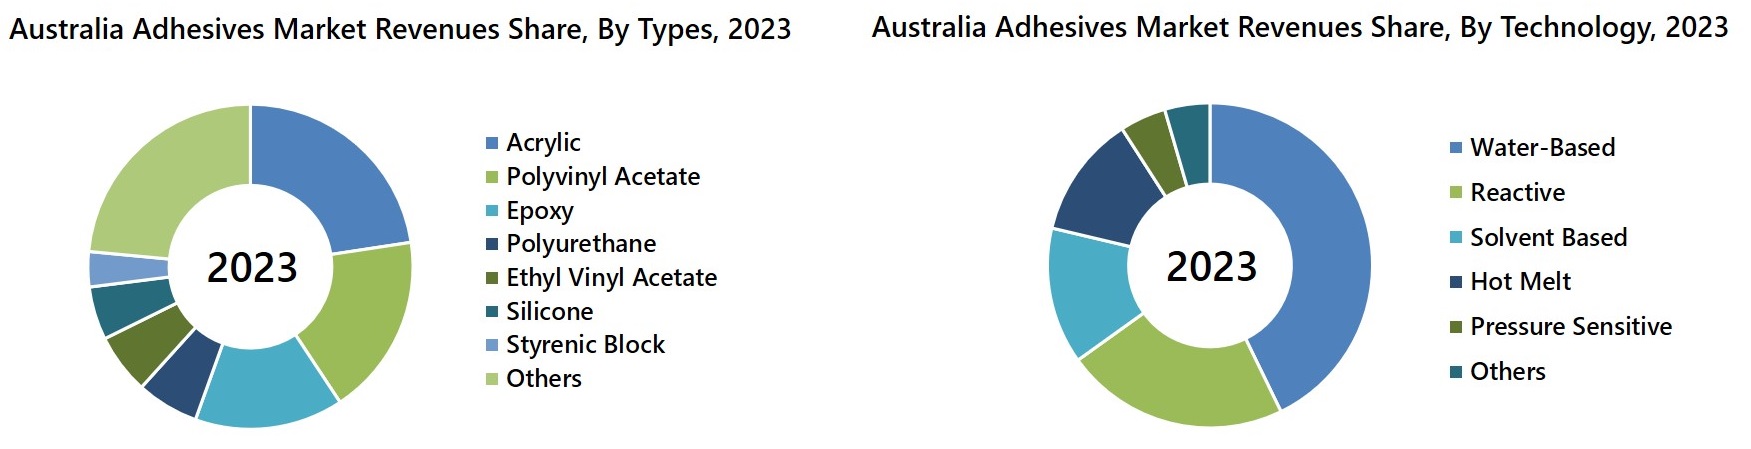 Australia Adhesives Market